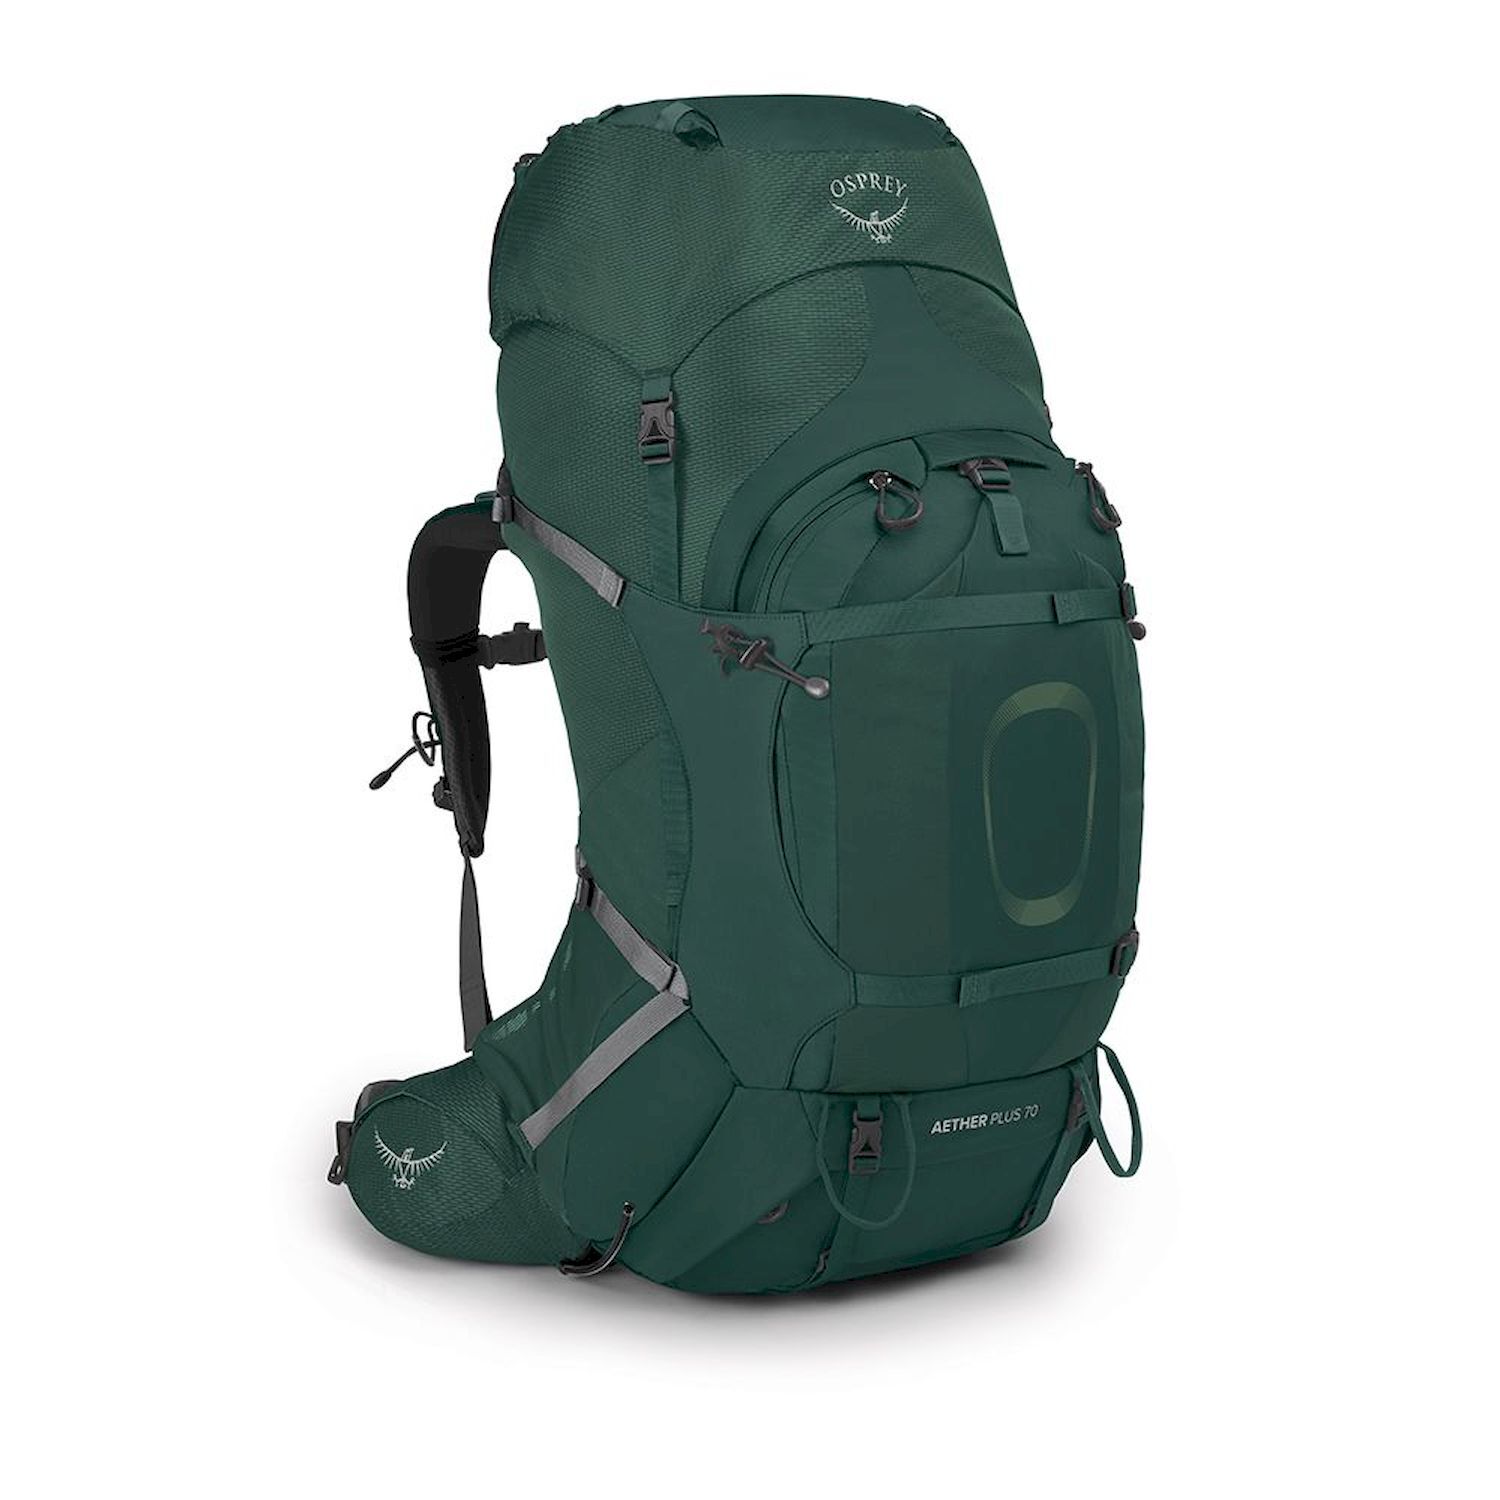 Osprey Aether Plus 70 - Hiking backpack - Men's